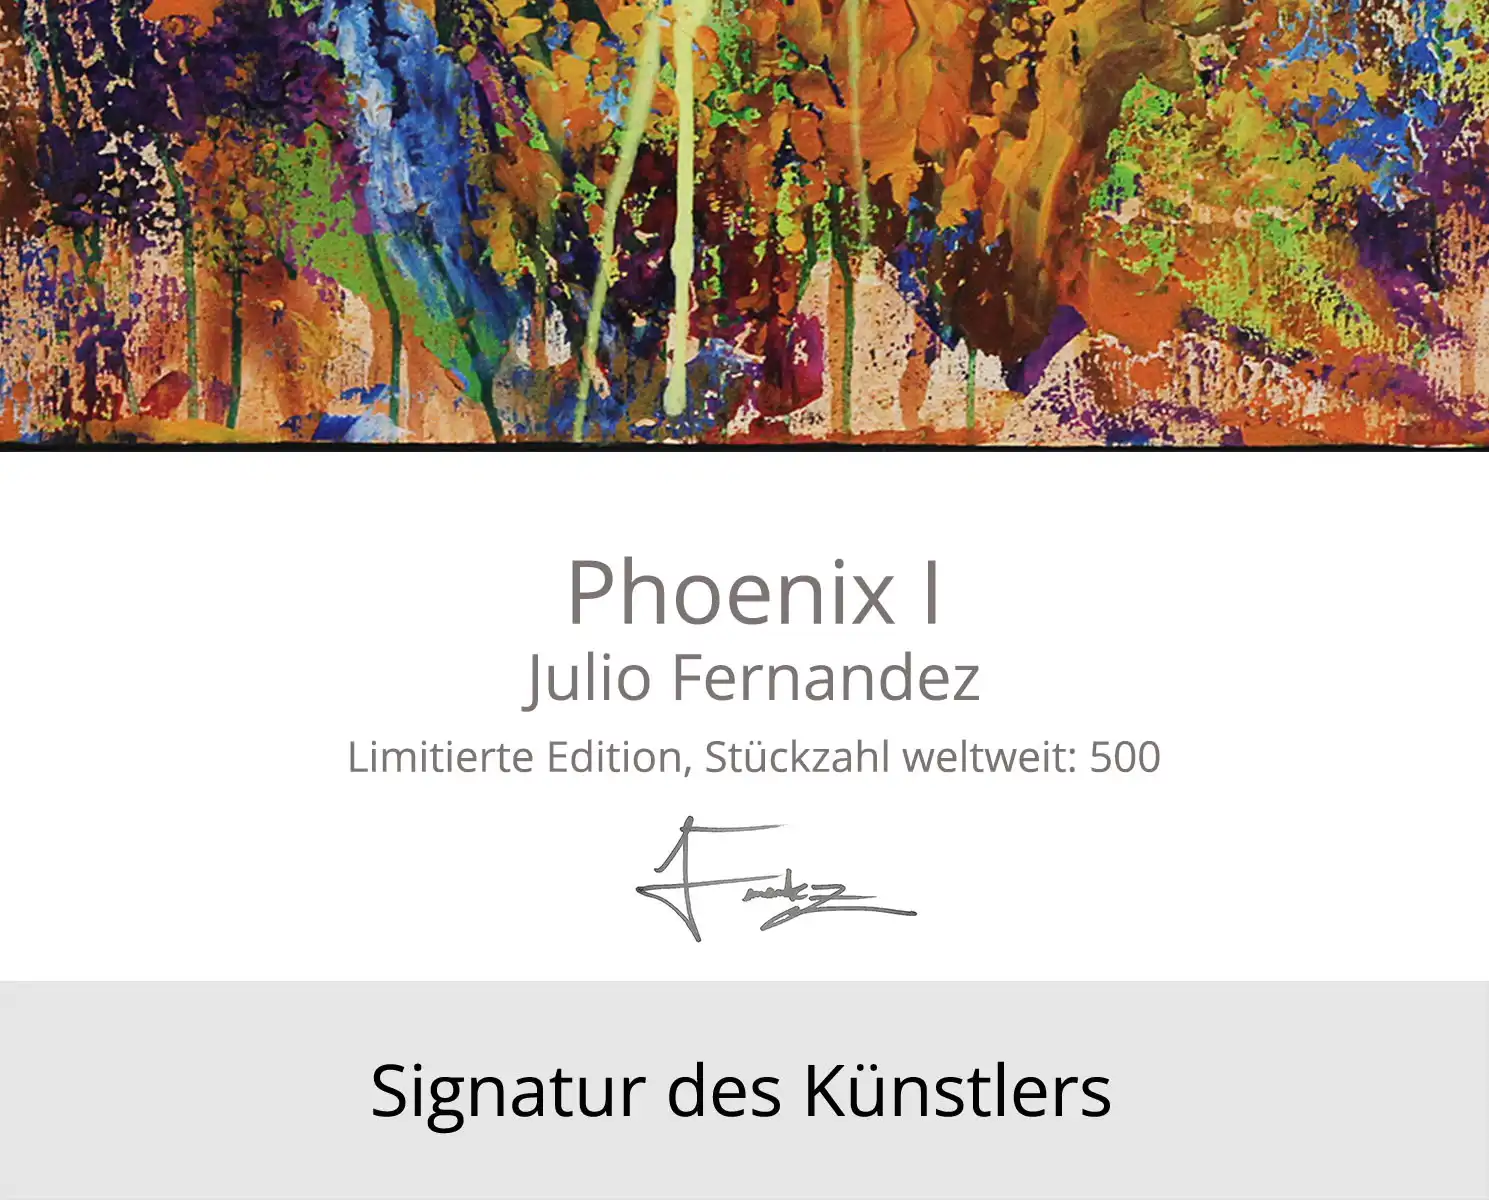 Limitierte Edition auf Papier, J. Fernandez "Phoenix I", Fineartprint, Kollektion E&K